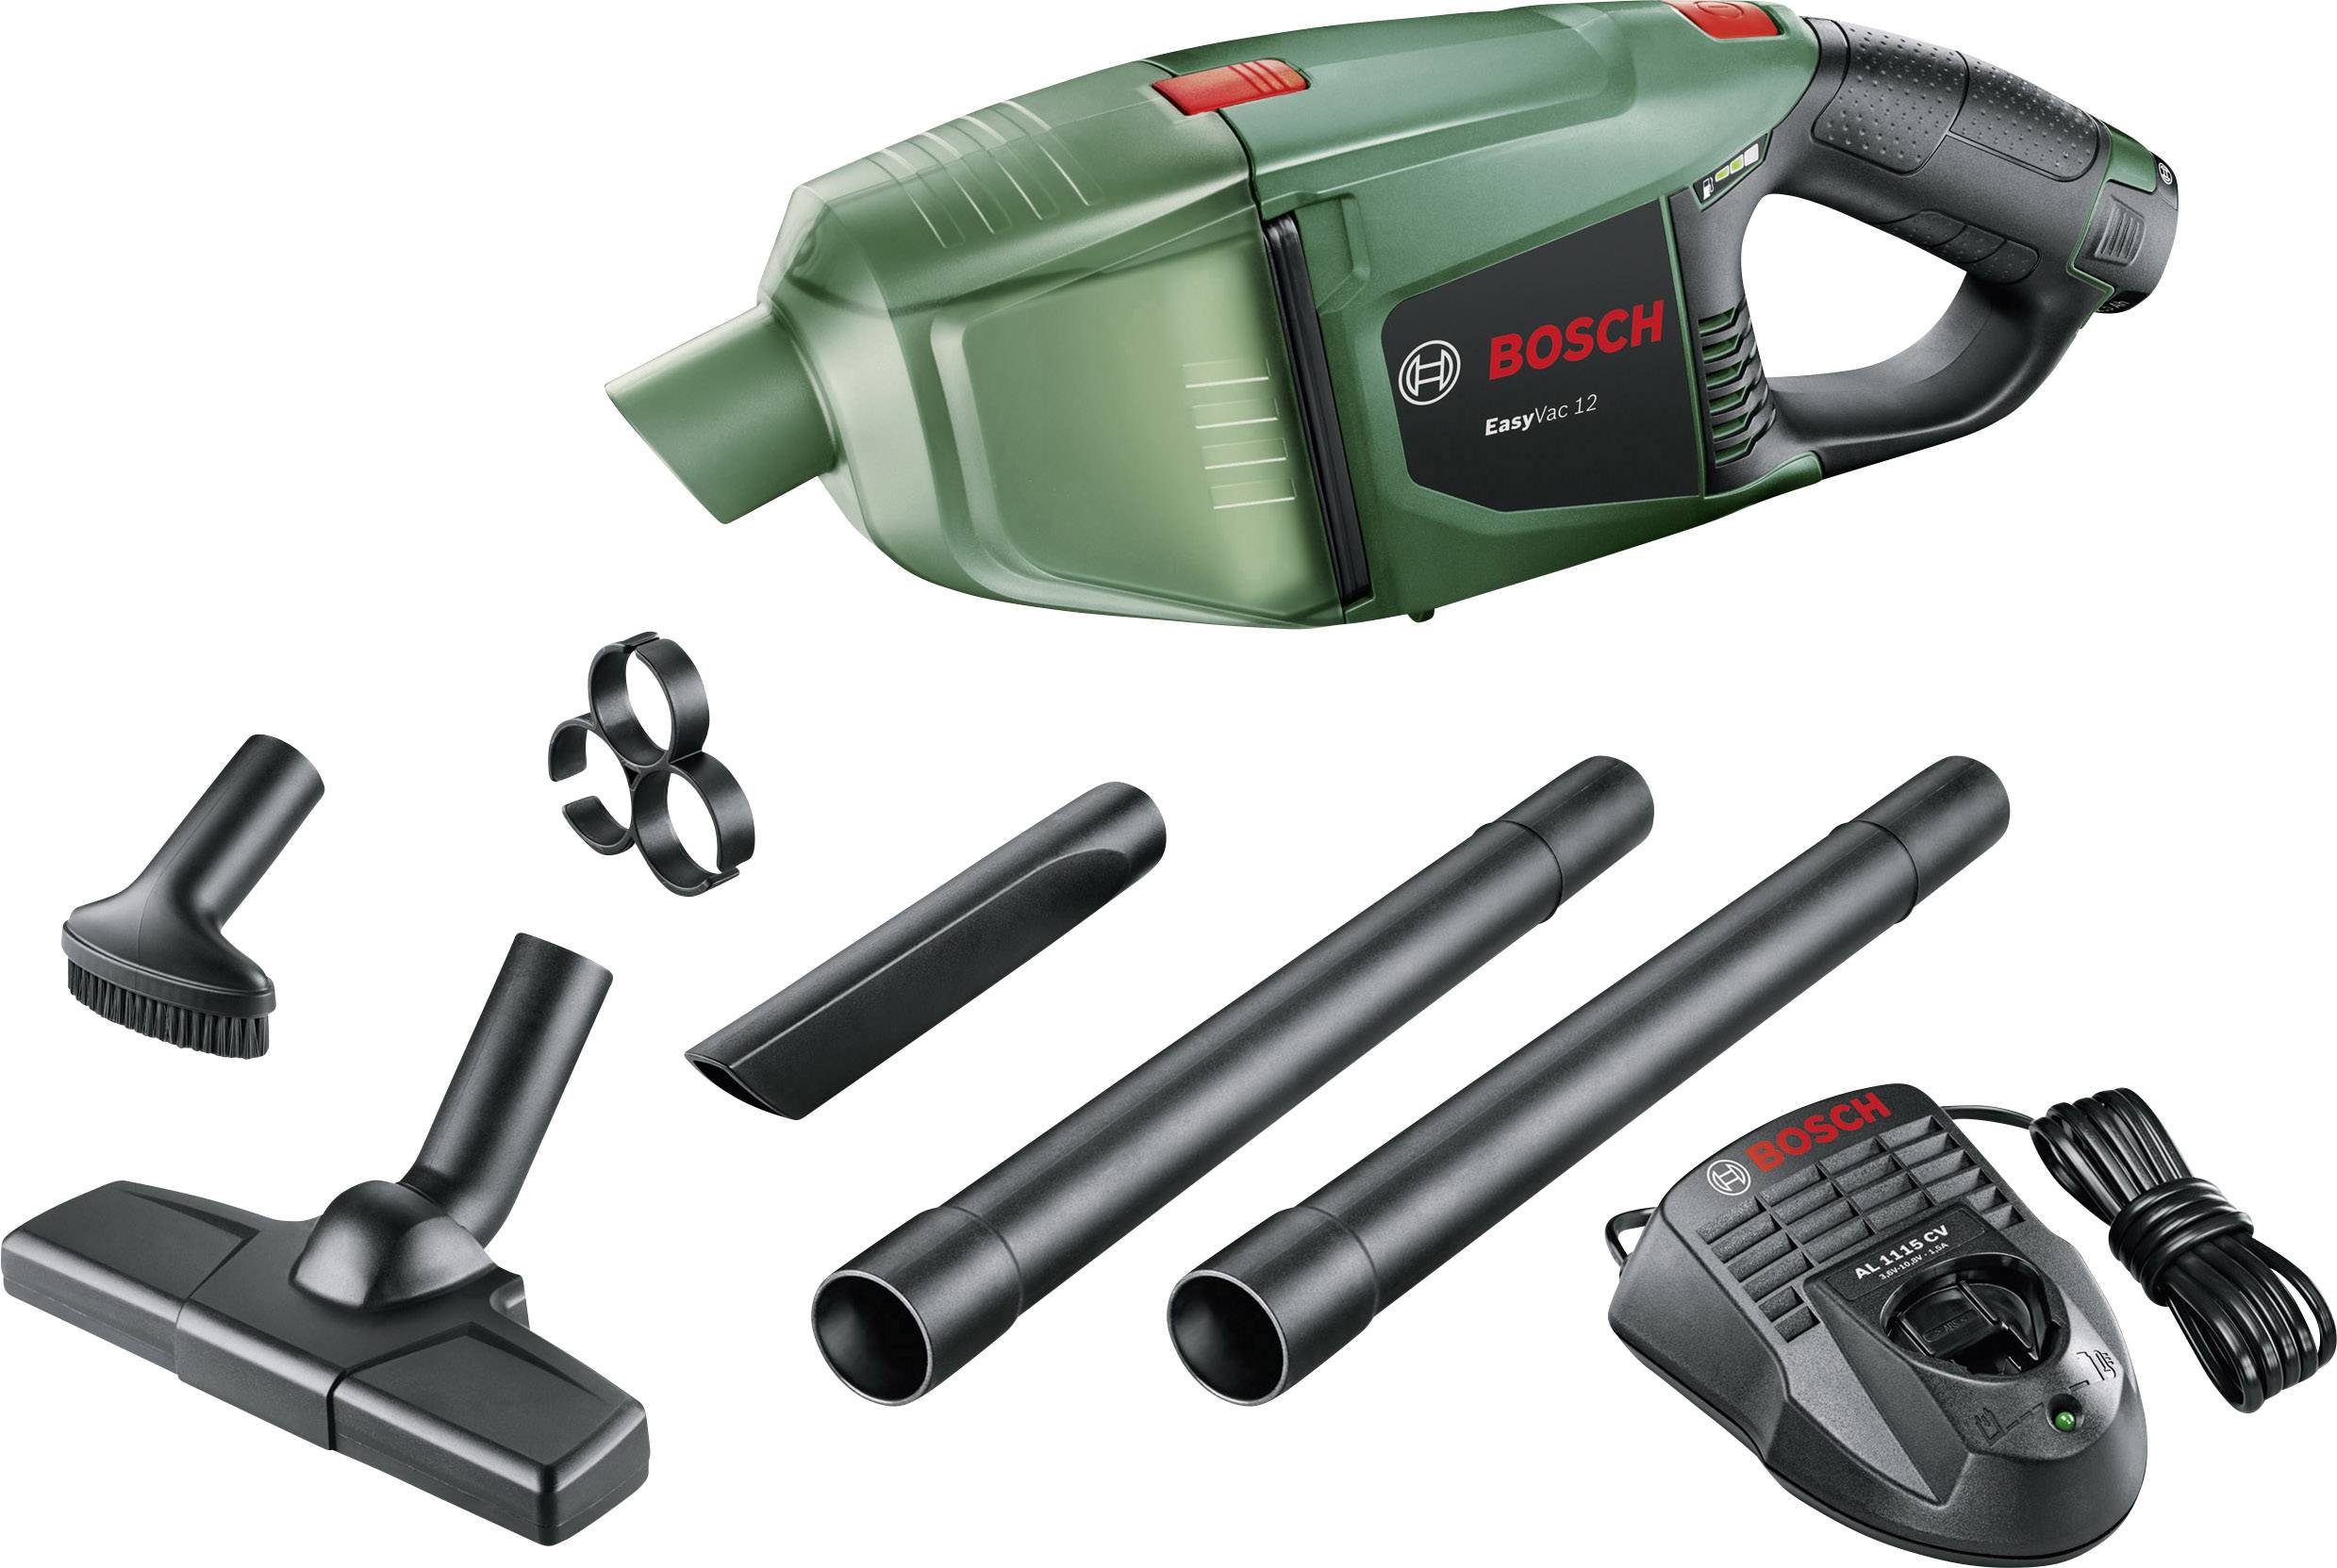 Bosch Home And Garden Easyvac 12 Handheld Battery Vacuum Cleaner